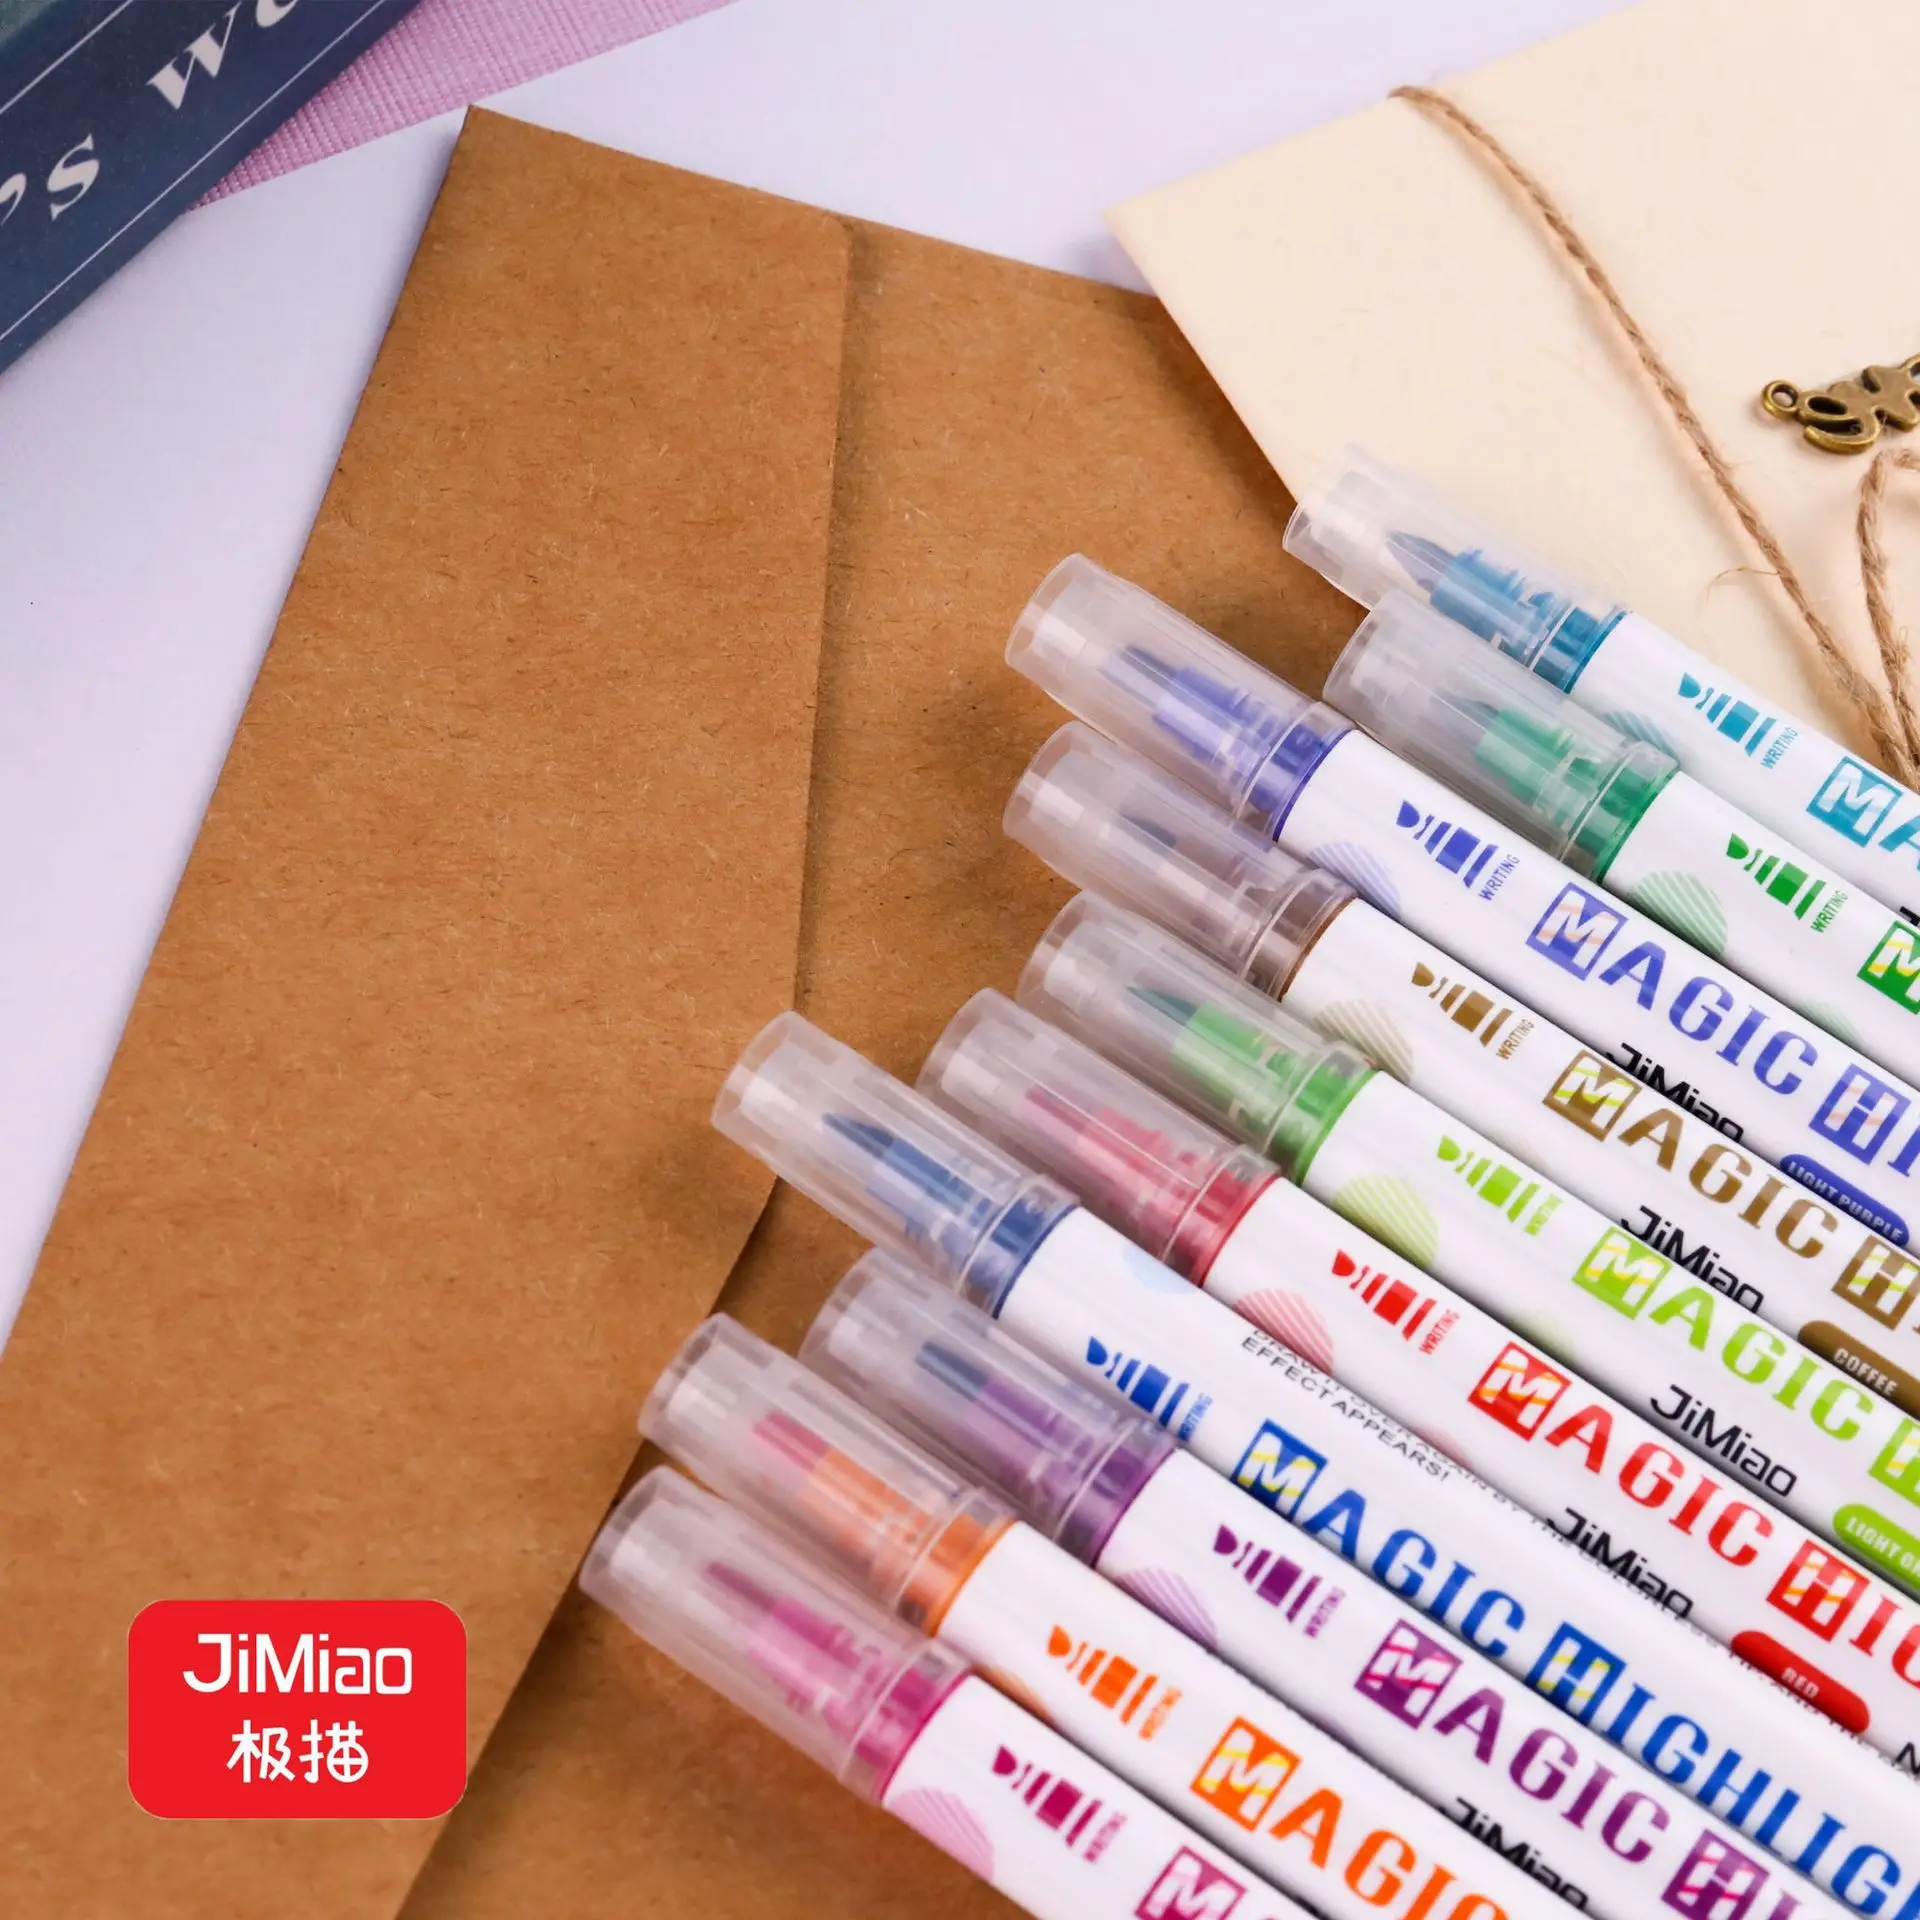 https://ae01.alicdn.com/kf/Hbeaf6dd57930458696247a7107d4b3375/12pcs-Magic-Variable-Color-Drawing-Pen-Set-Discolored-Highlighter-Marker-Pens-Scrapbooking-Art-Supplies-Stationery-School.jpg